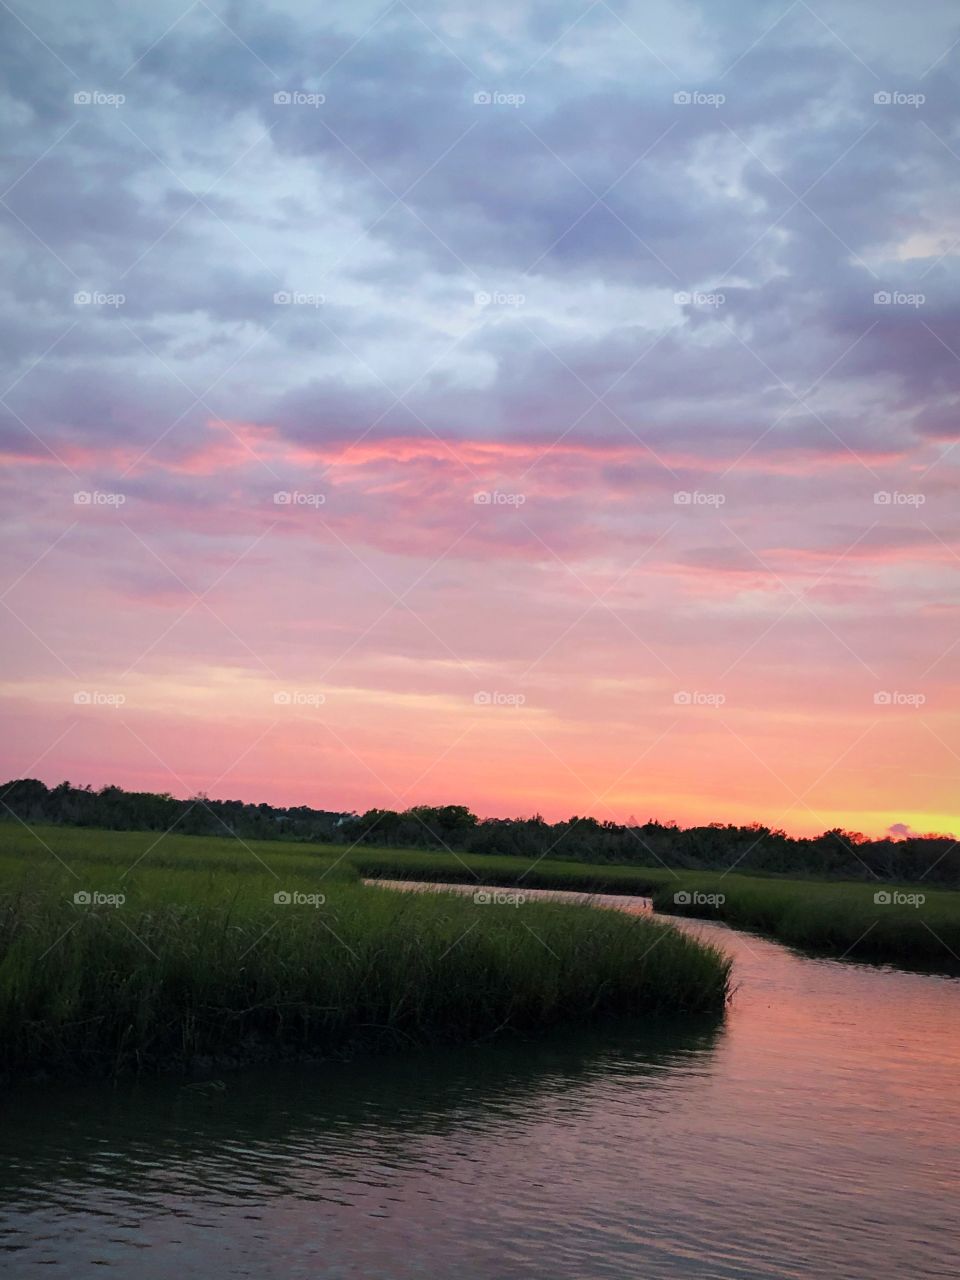 River days fishing! Evening NC sunset! 